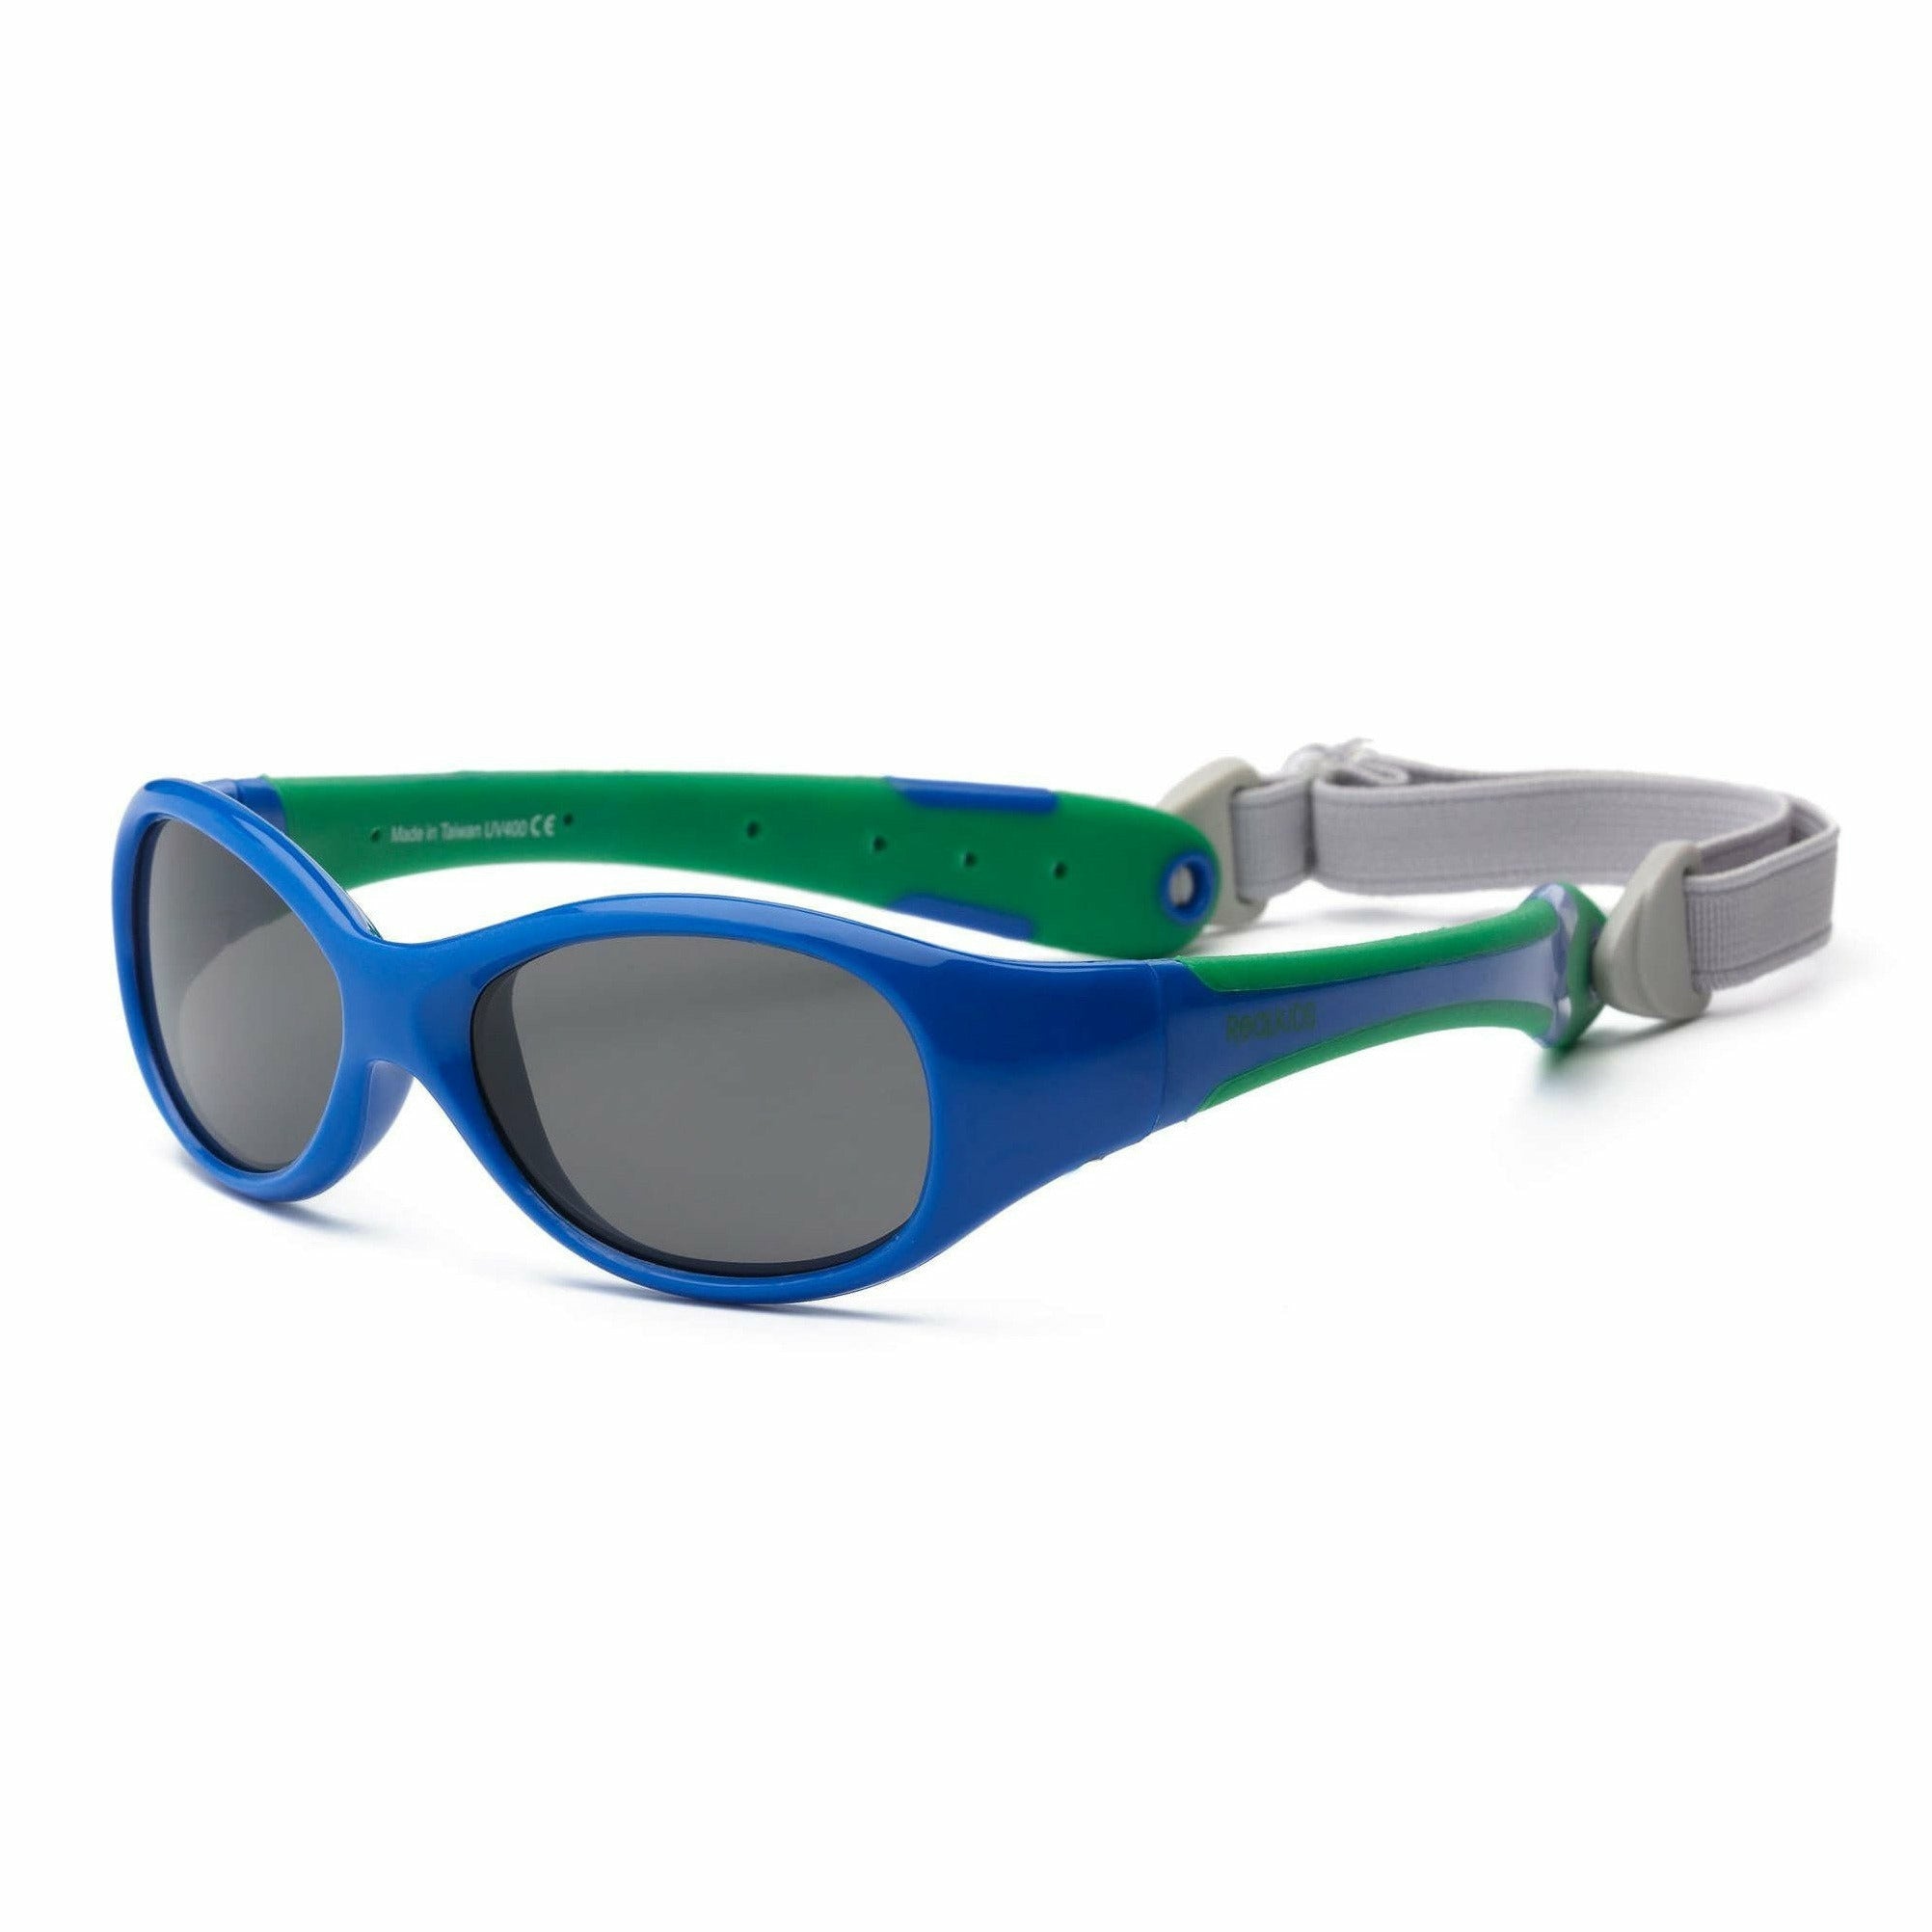 Real Shades Sunglasses Explorer / Blue/Green / 2+